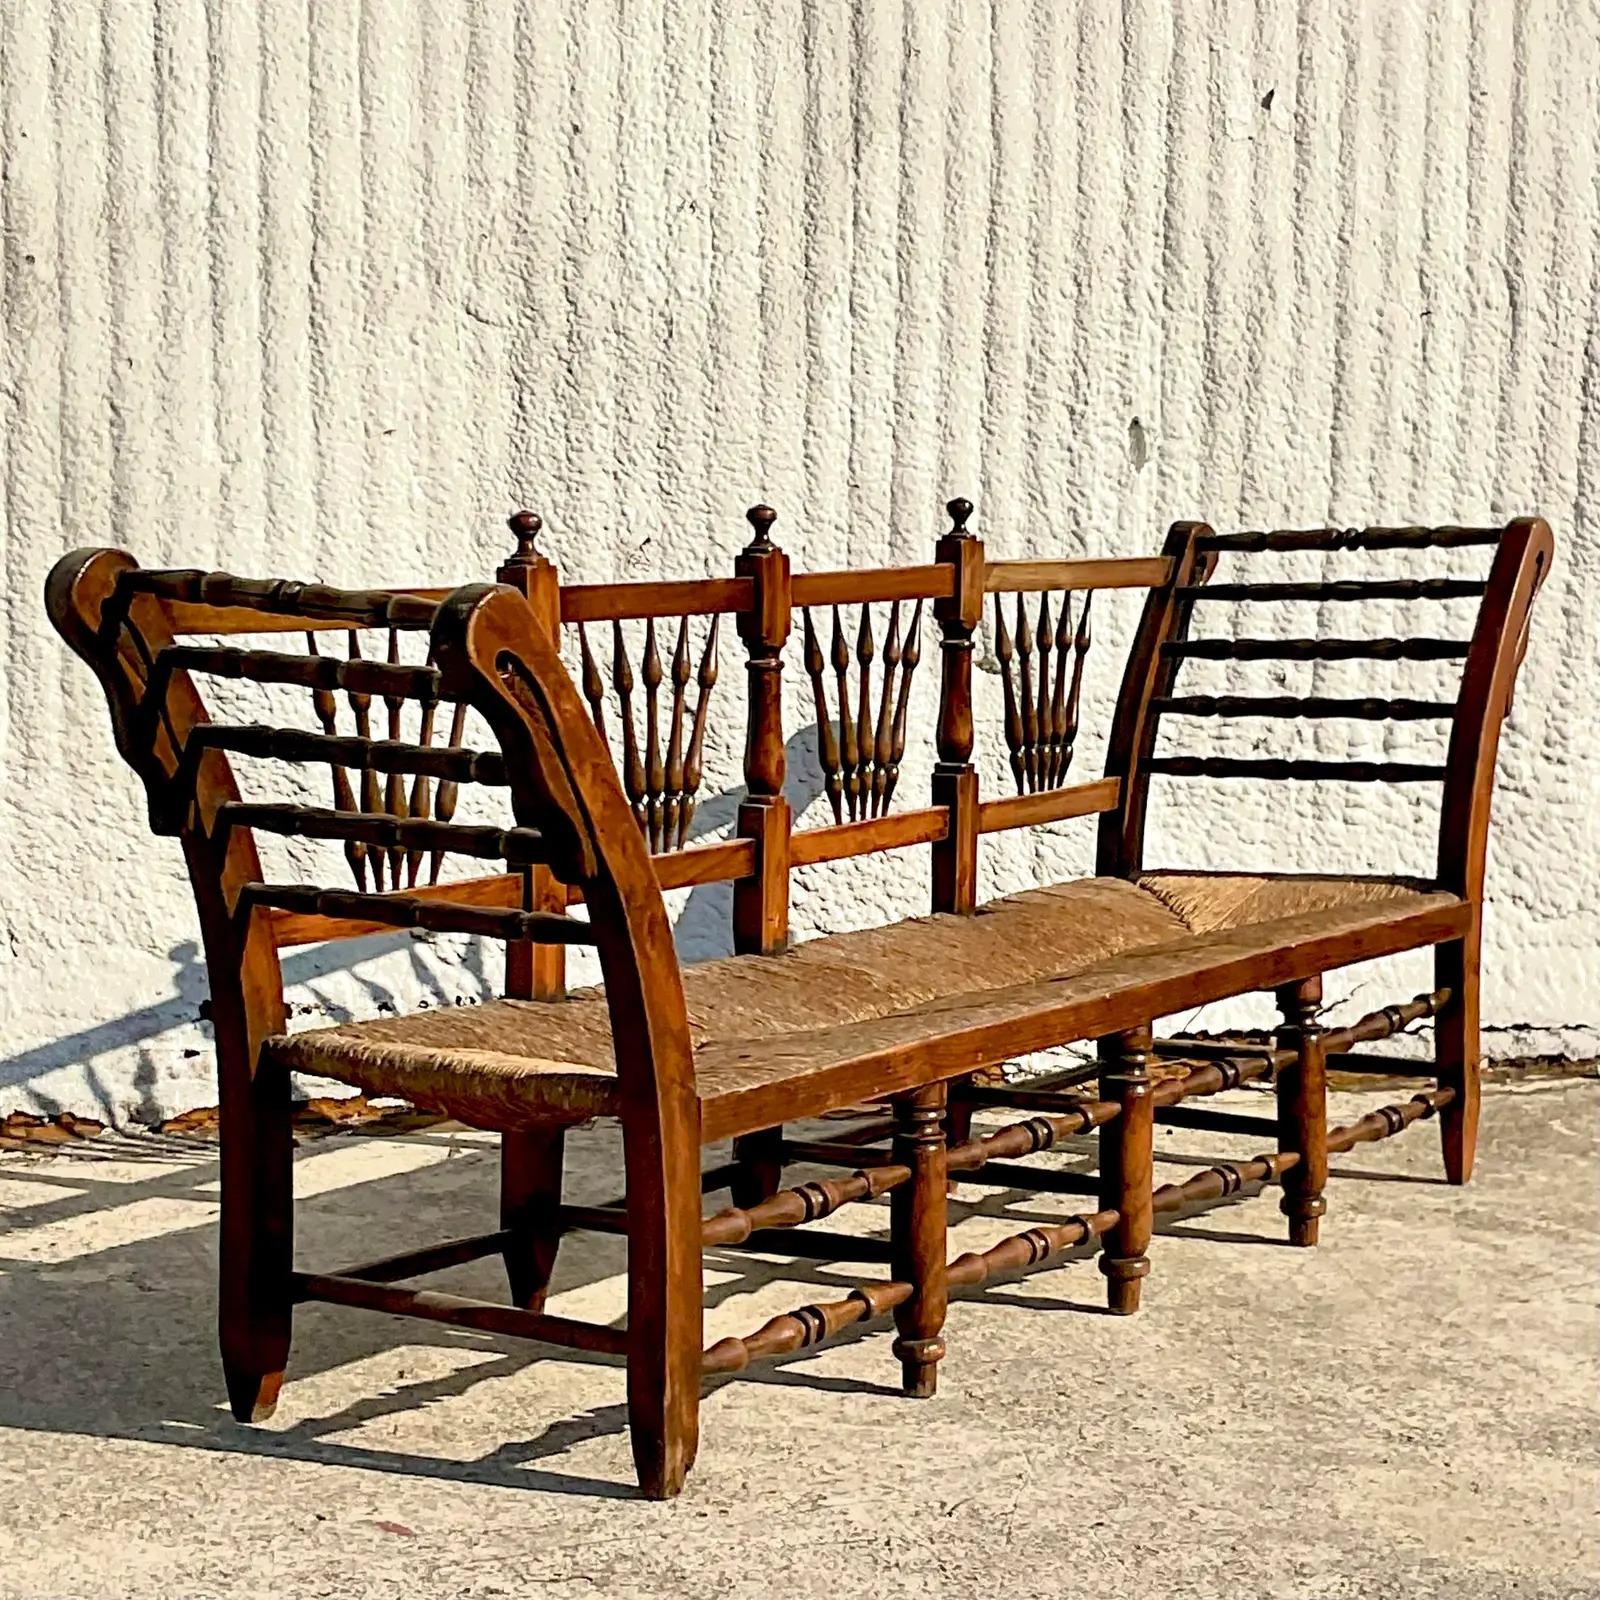 vintage rustic bench